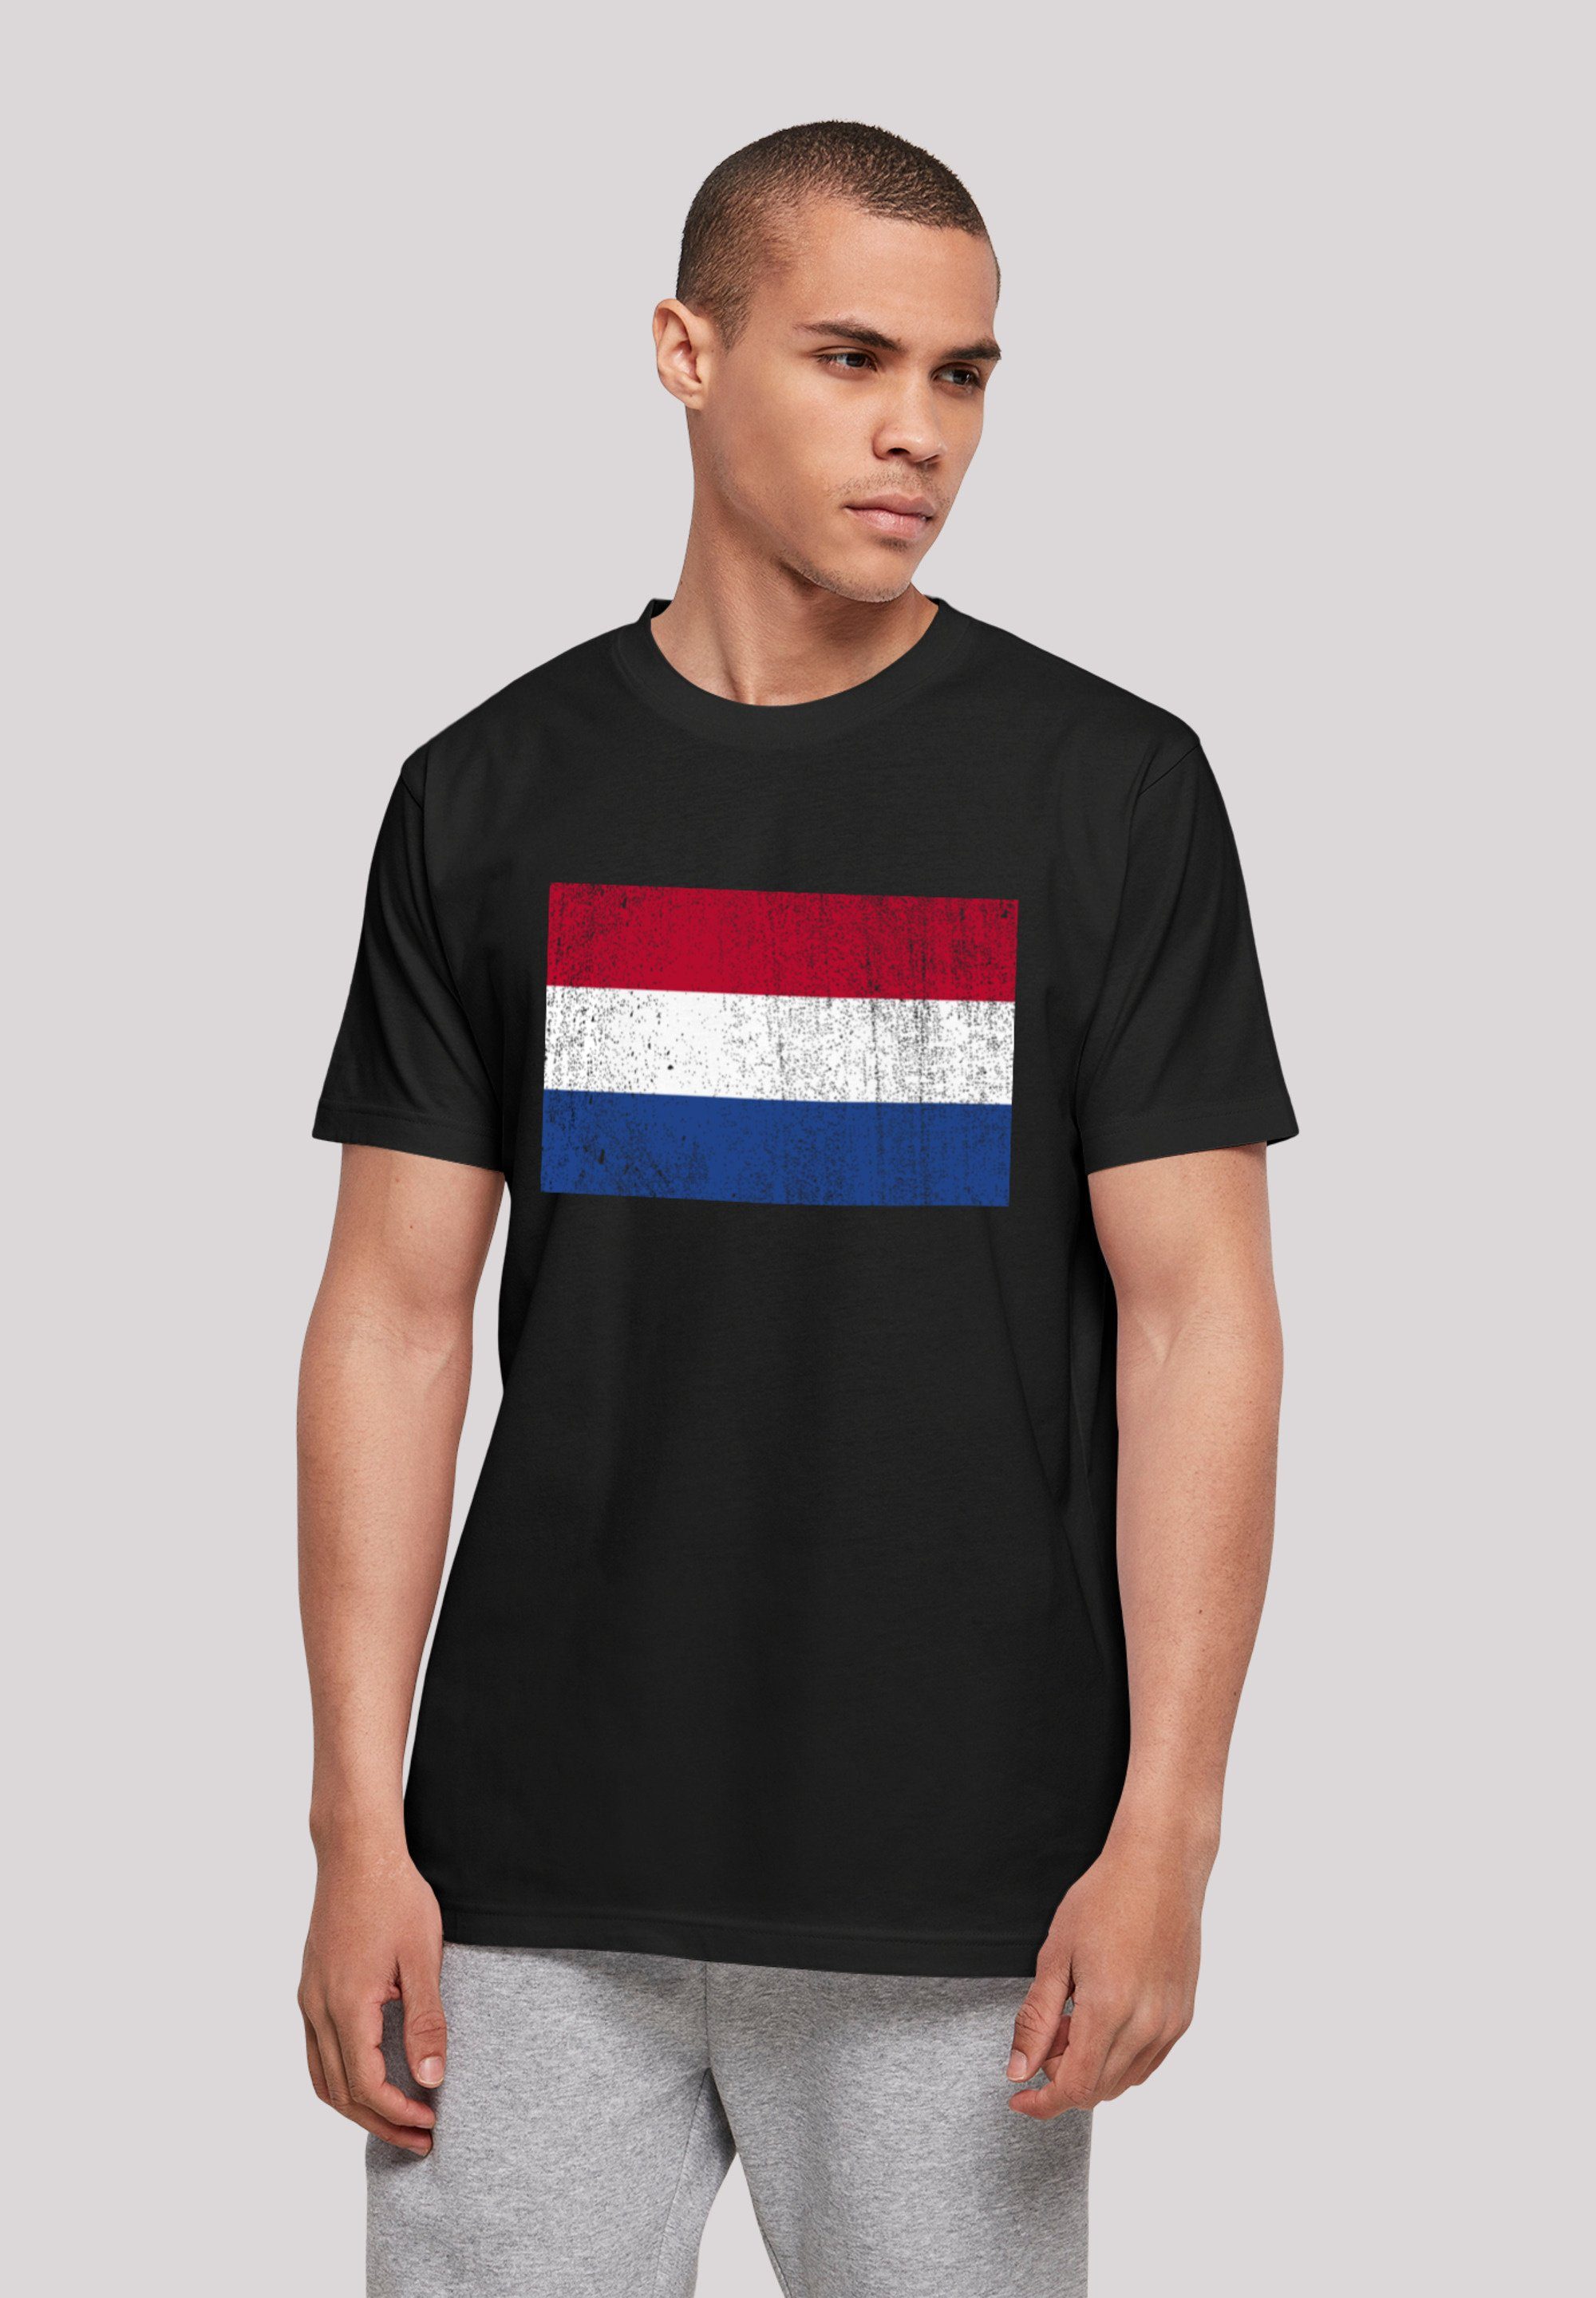 F4NT4STIC T-Shirt Holland schwarz distressed Flagge Niederlande Print